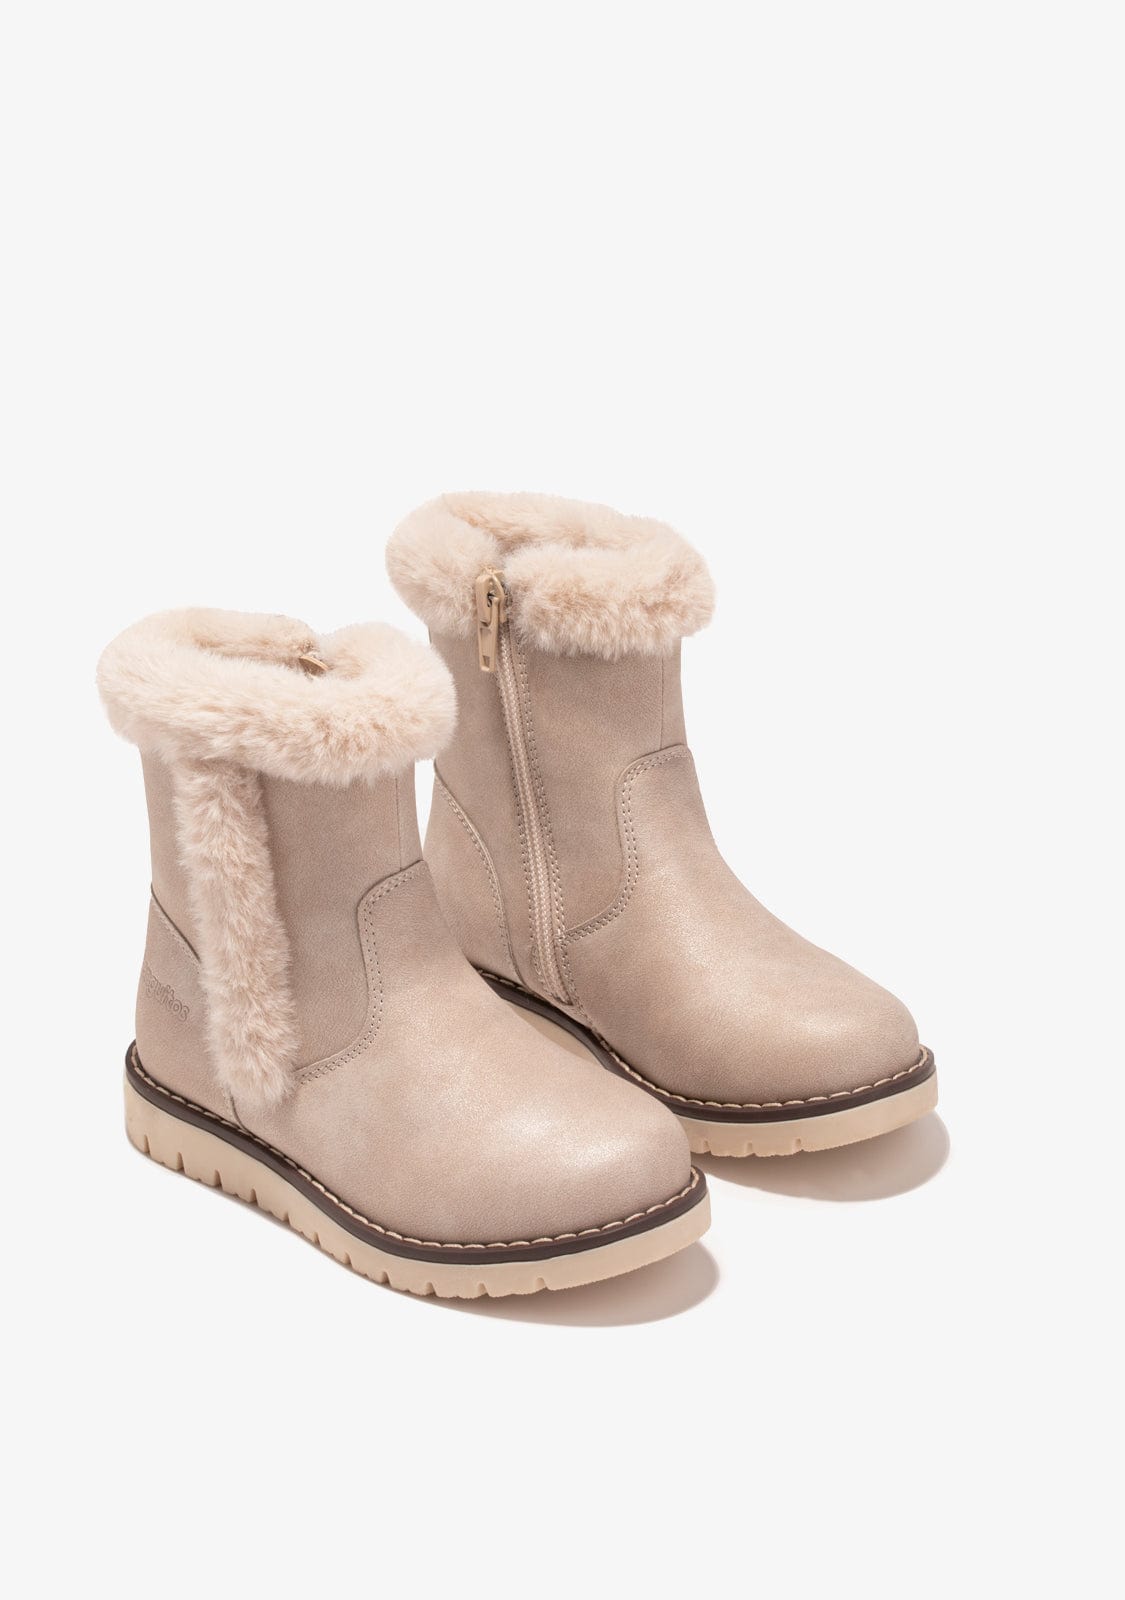 CONGUITOS Shoes Girl's Beige Fur Boots Napa